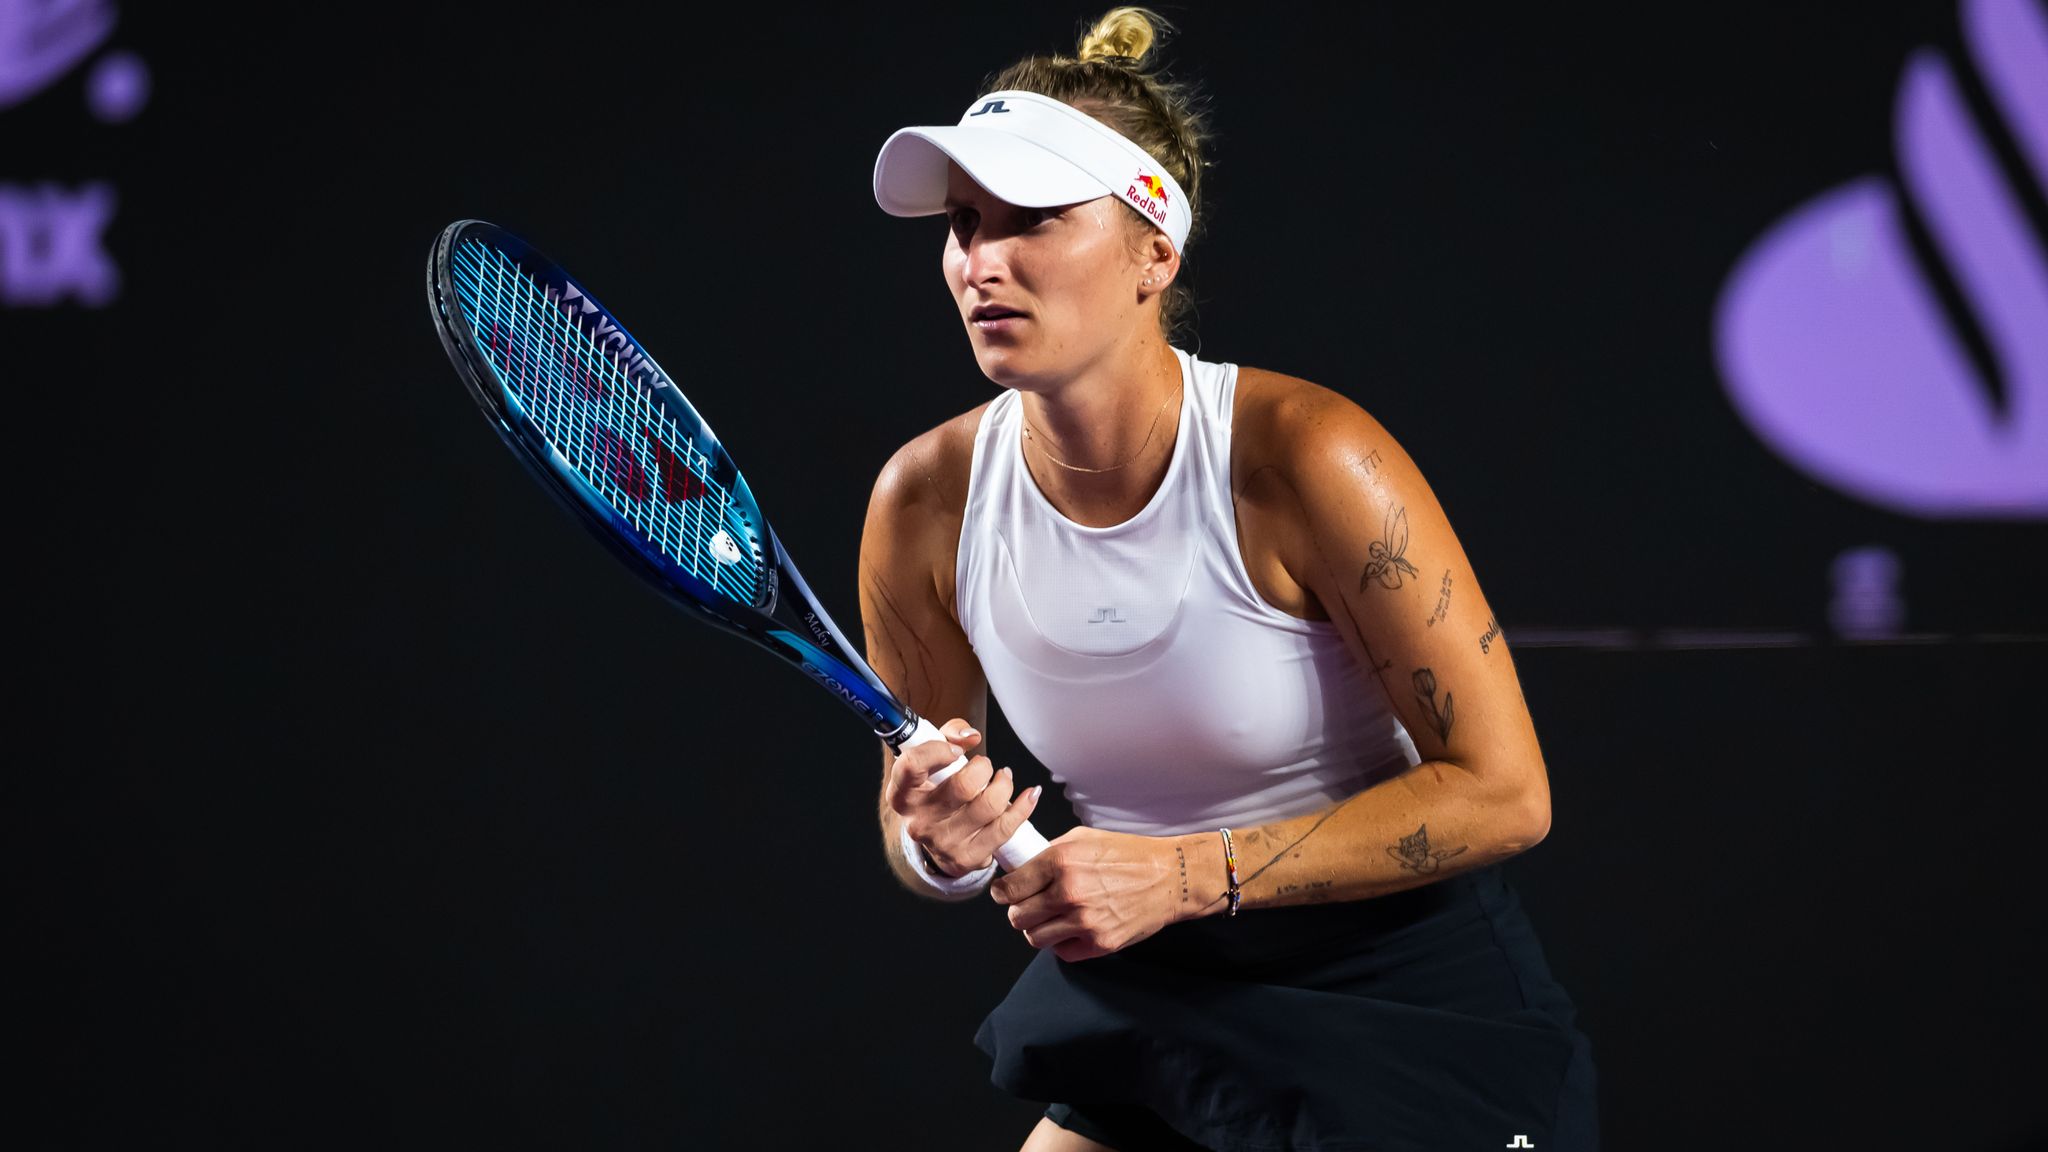 WTA Finals Wimbledon champion Marketa Vondrousova criticises condition of court in Cancun Tennis News Sky Sports